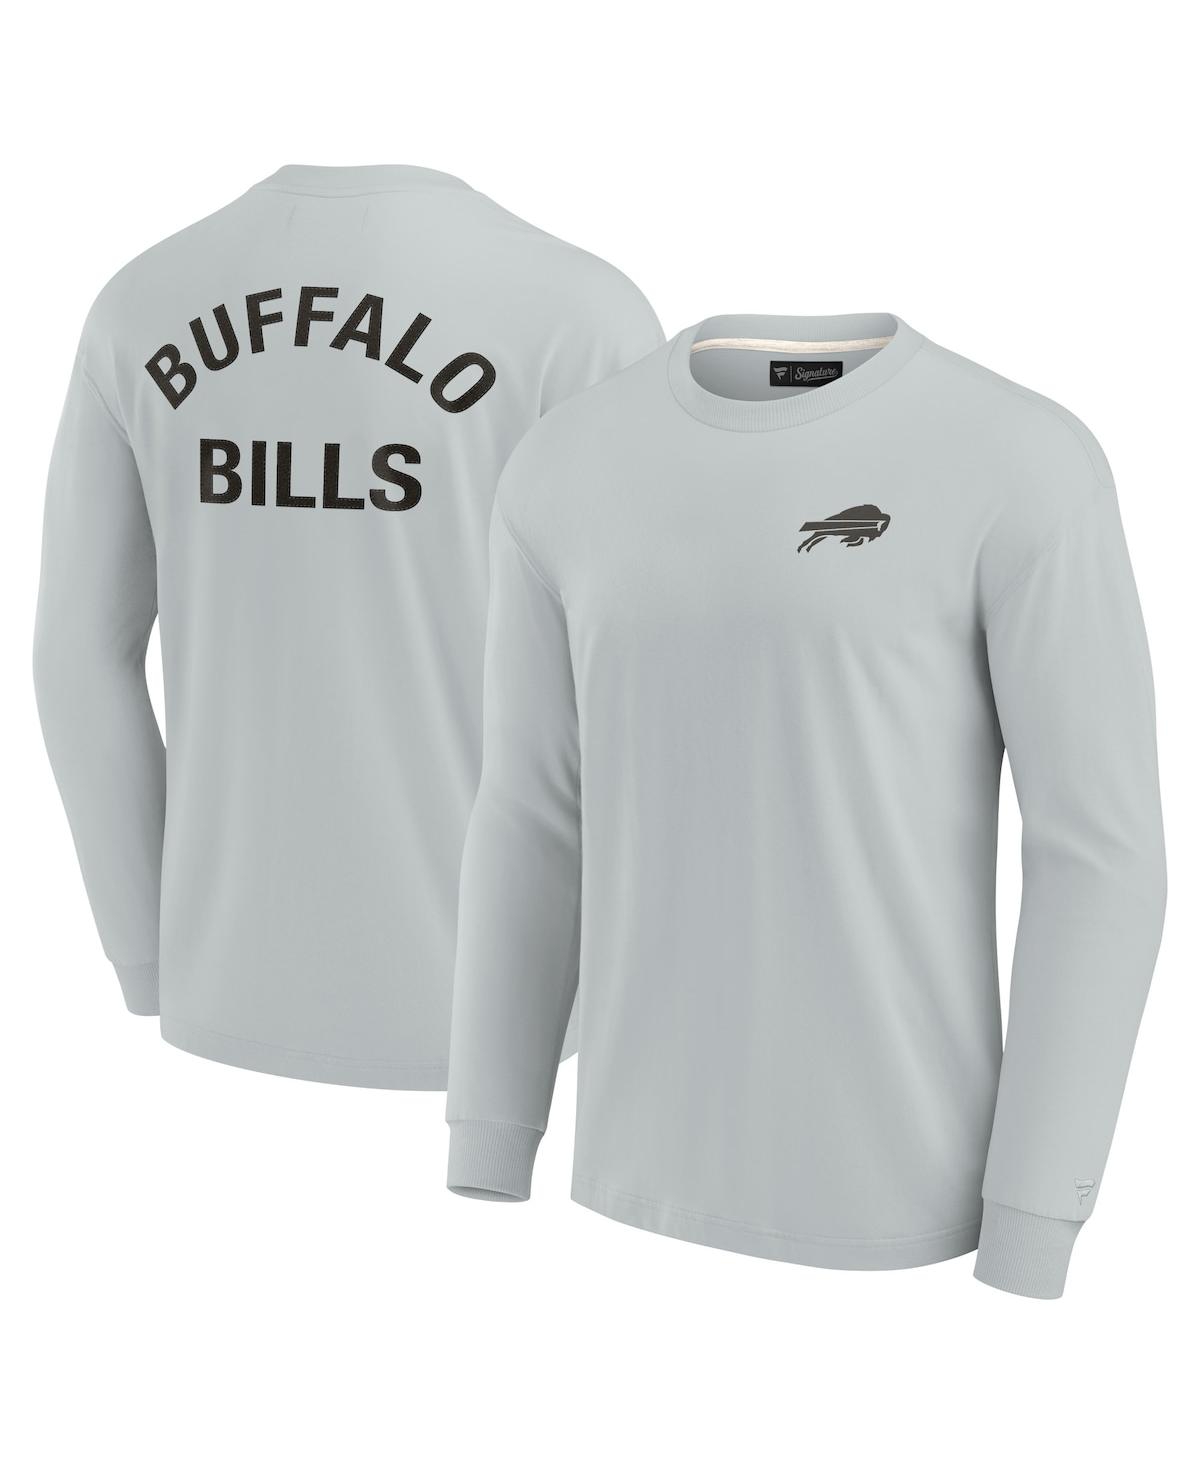 Men's and Women's Fanatics Signature Gray Buffalo Bills Super Soft Long Sleeve T-shirt - Gray